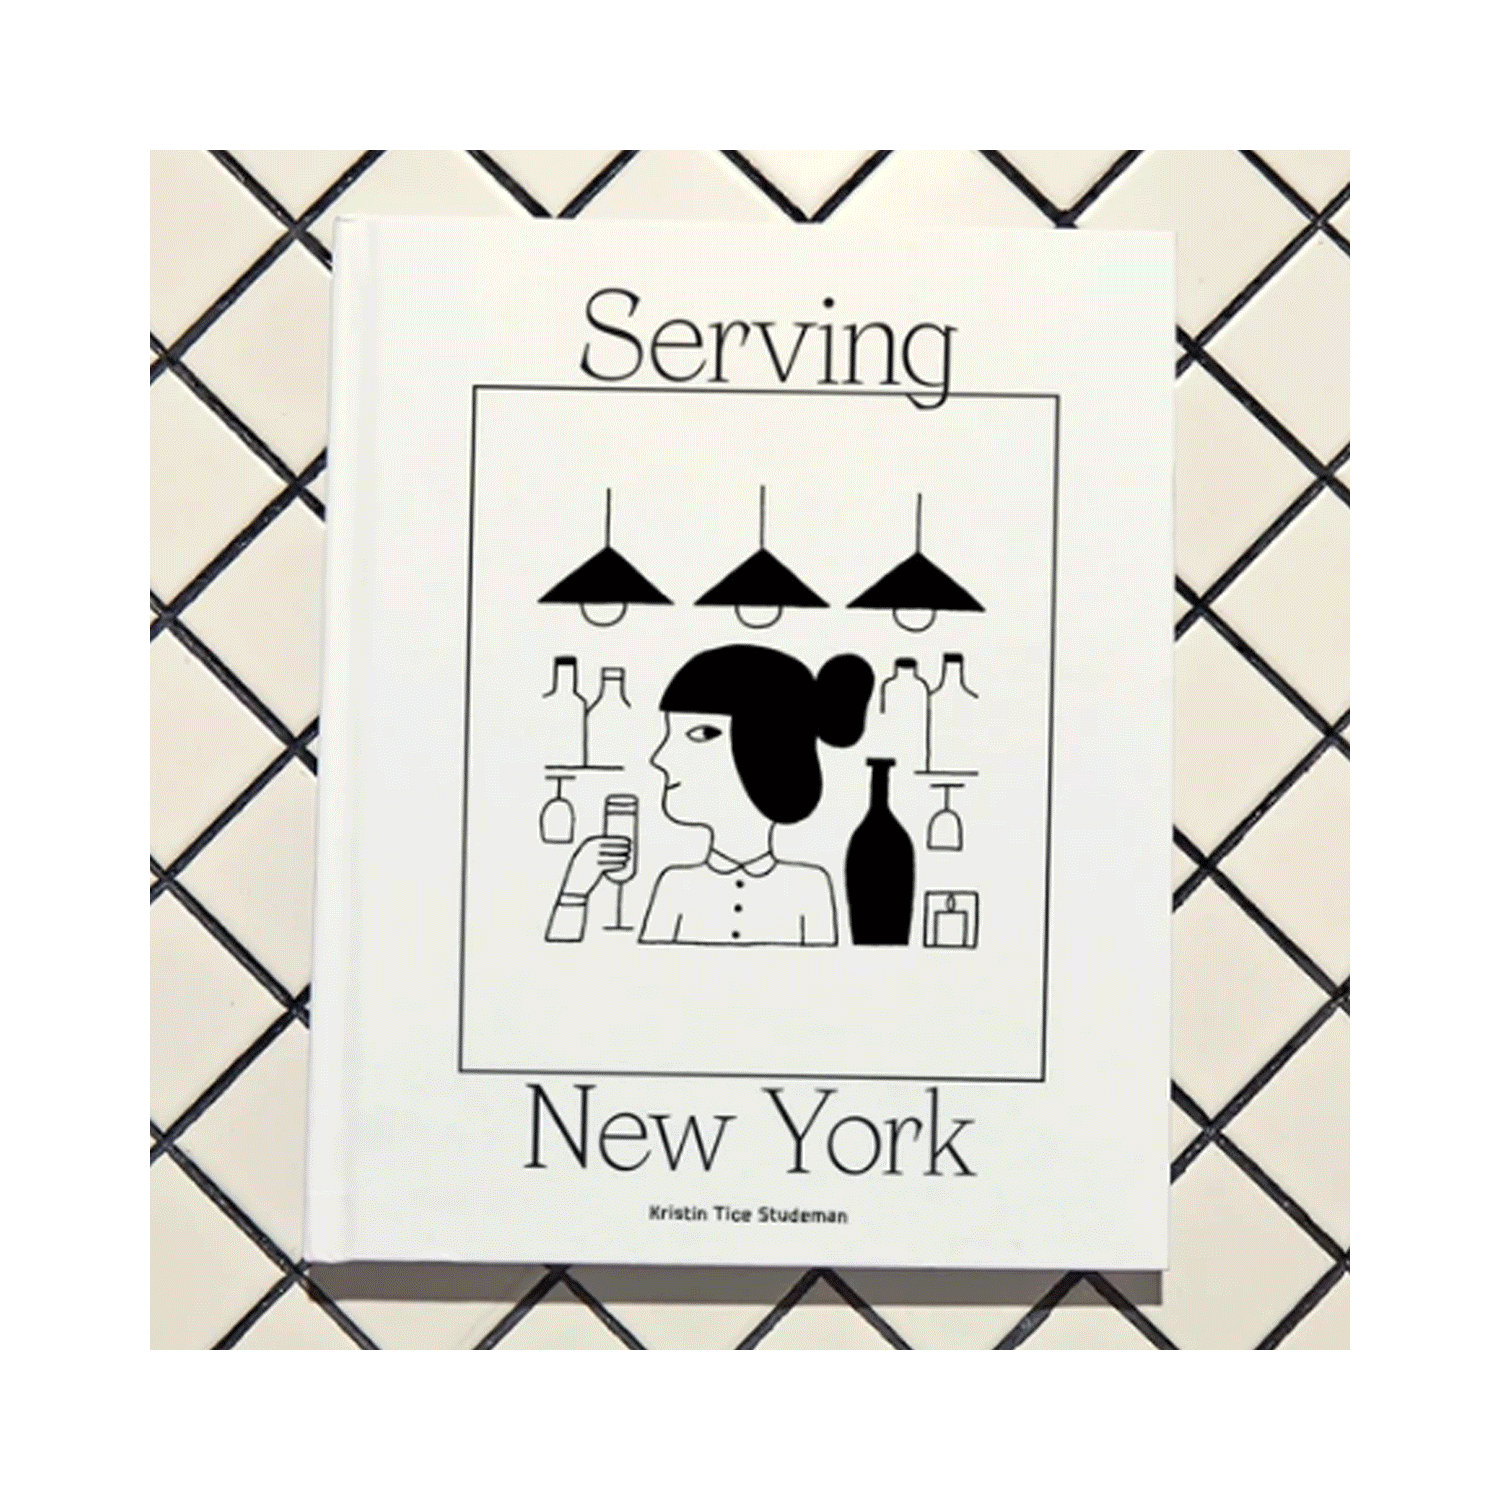 Serving New York by Kristin Tice Studeman &amp; Bryan Fountain 